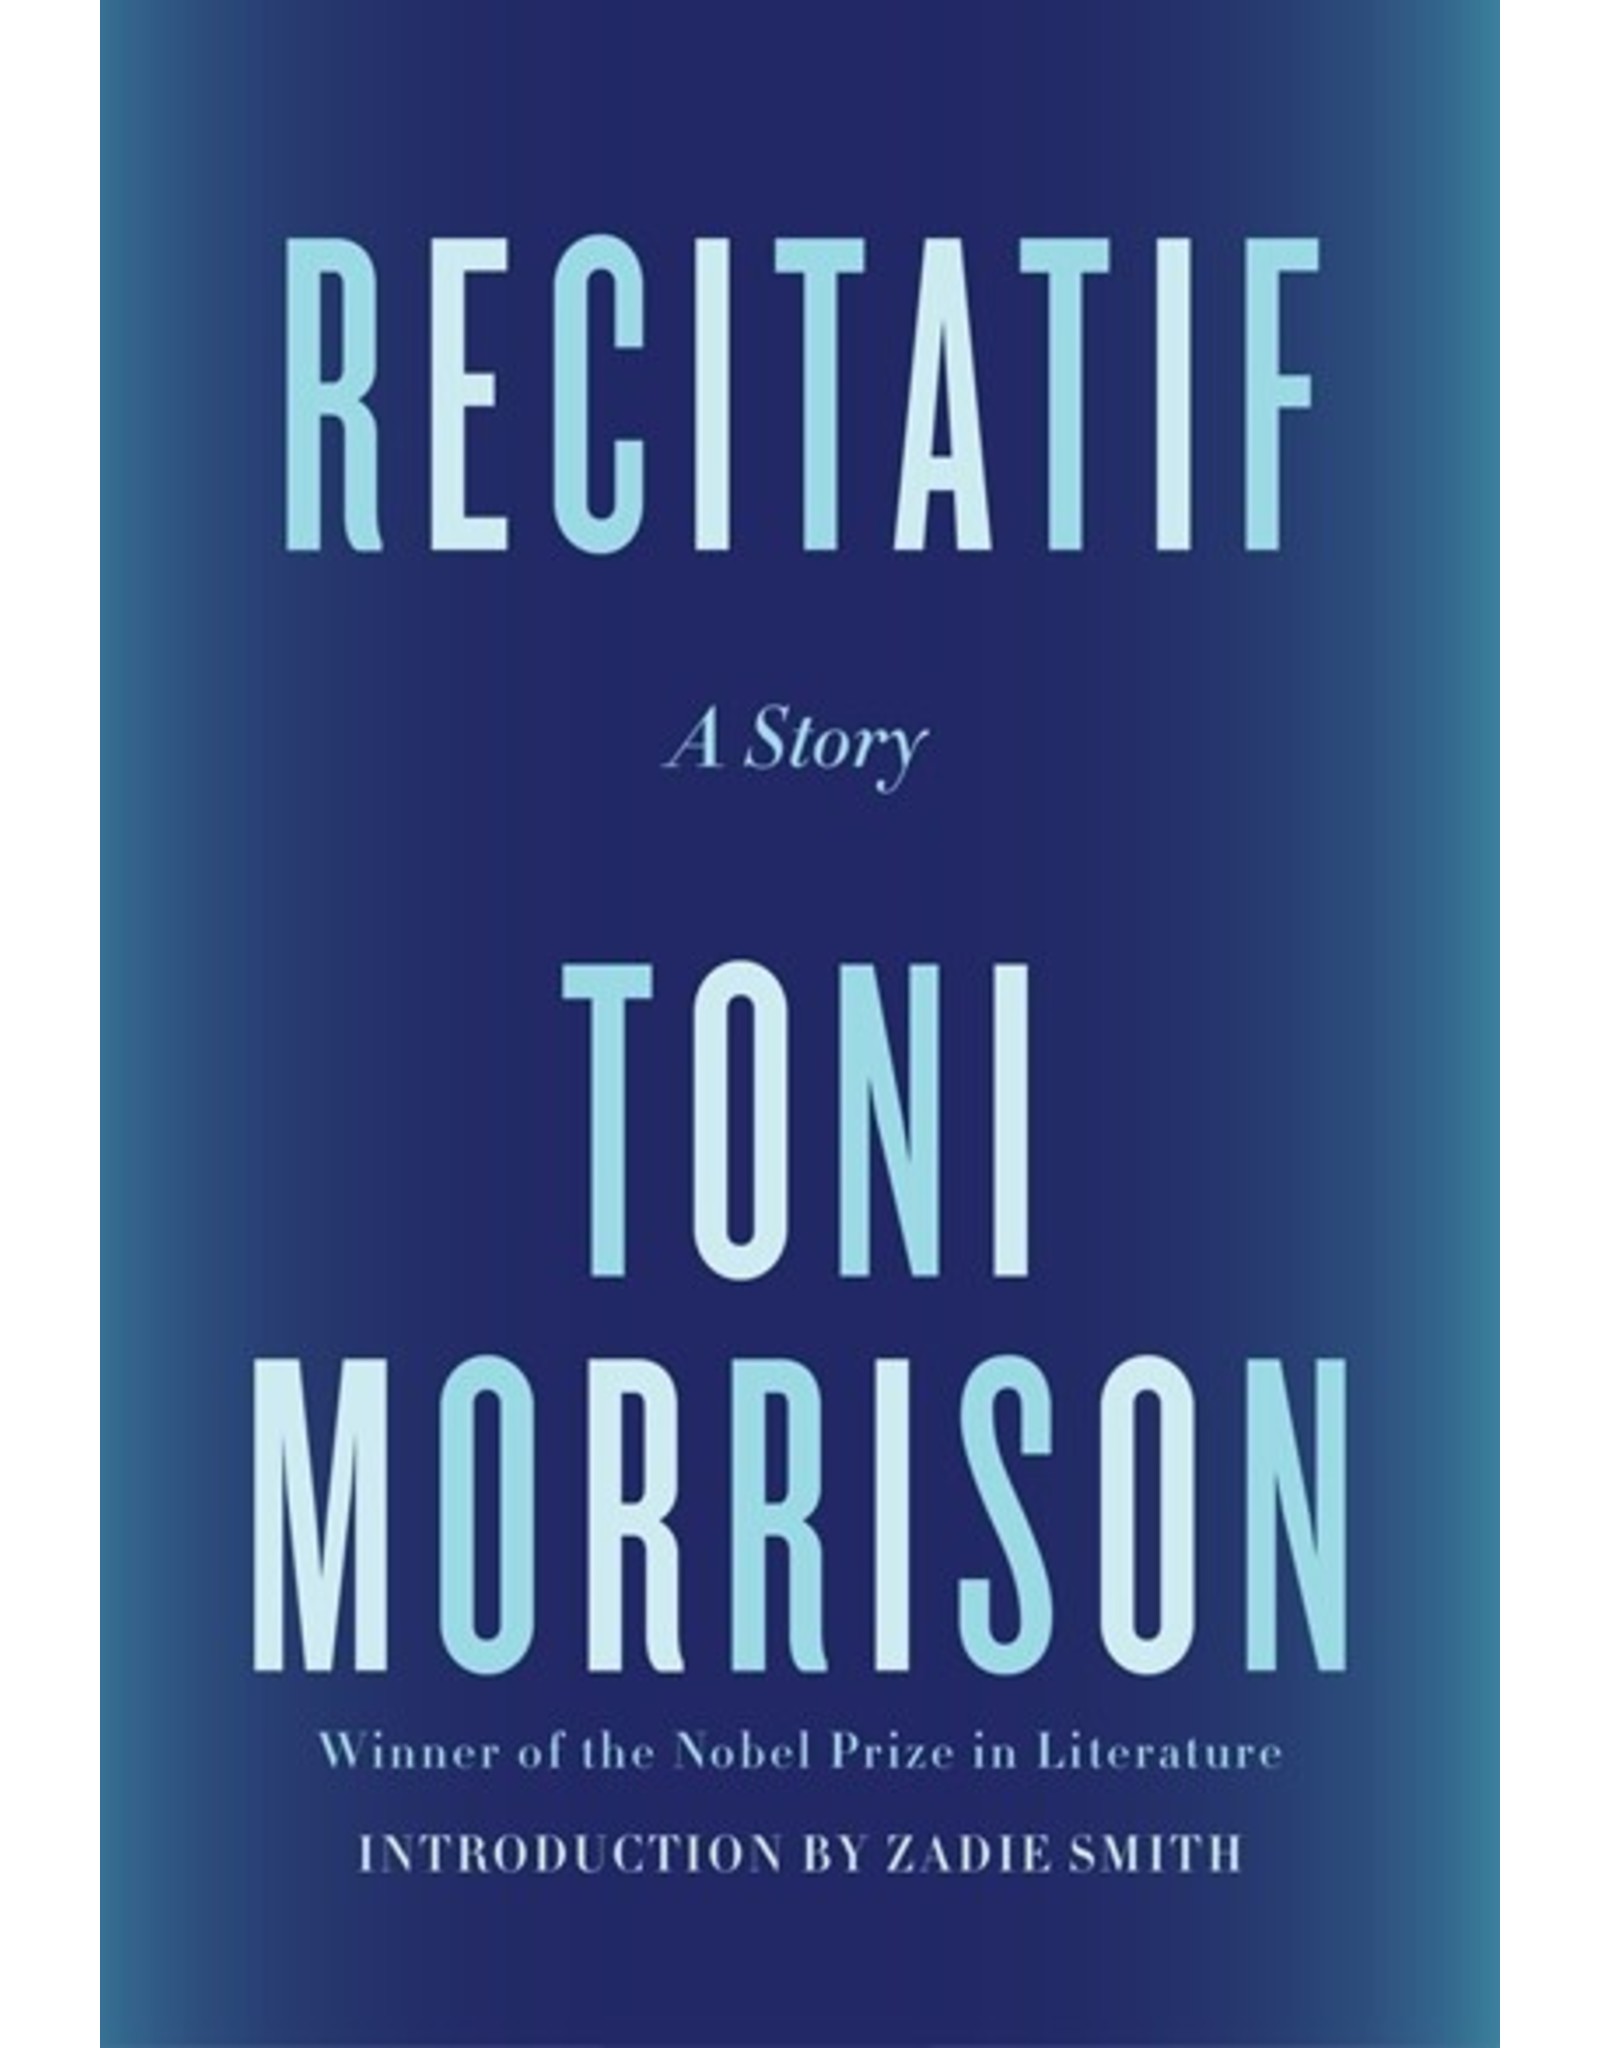 Books Recitatif : A Story by Toni Morrison